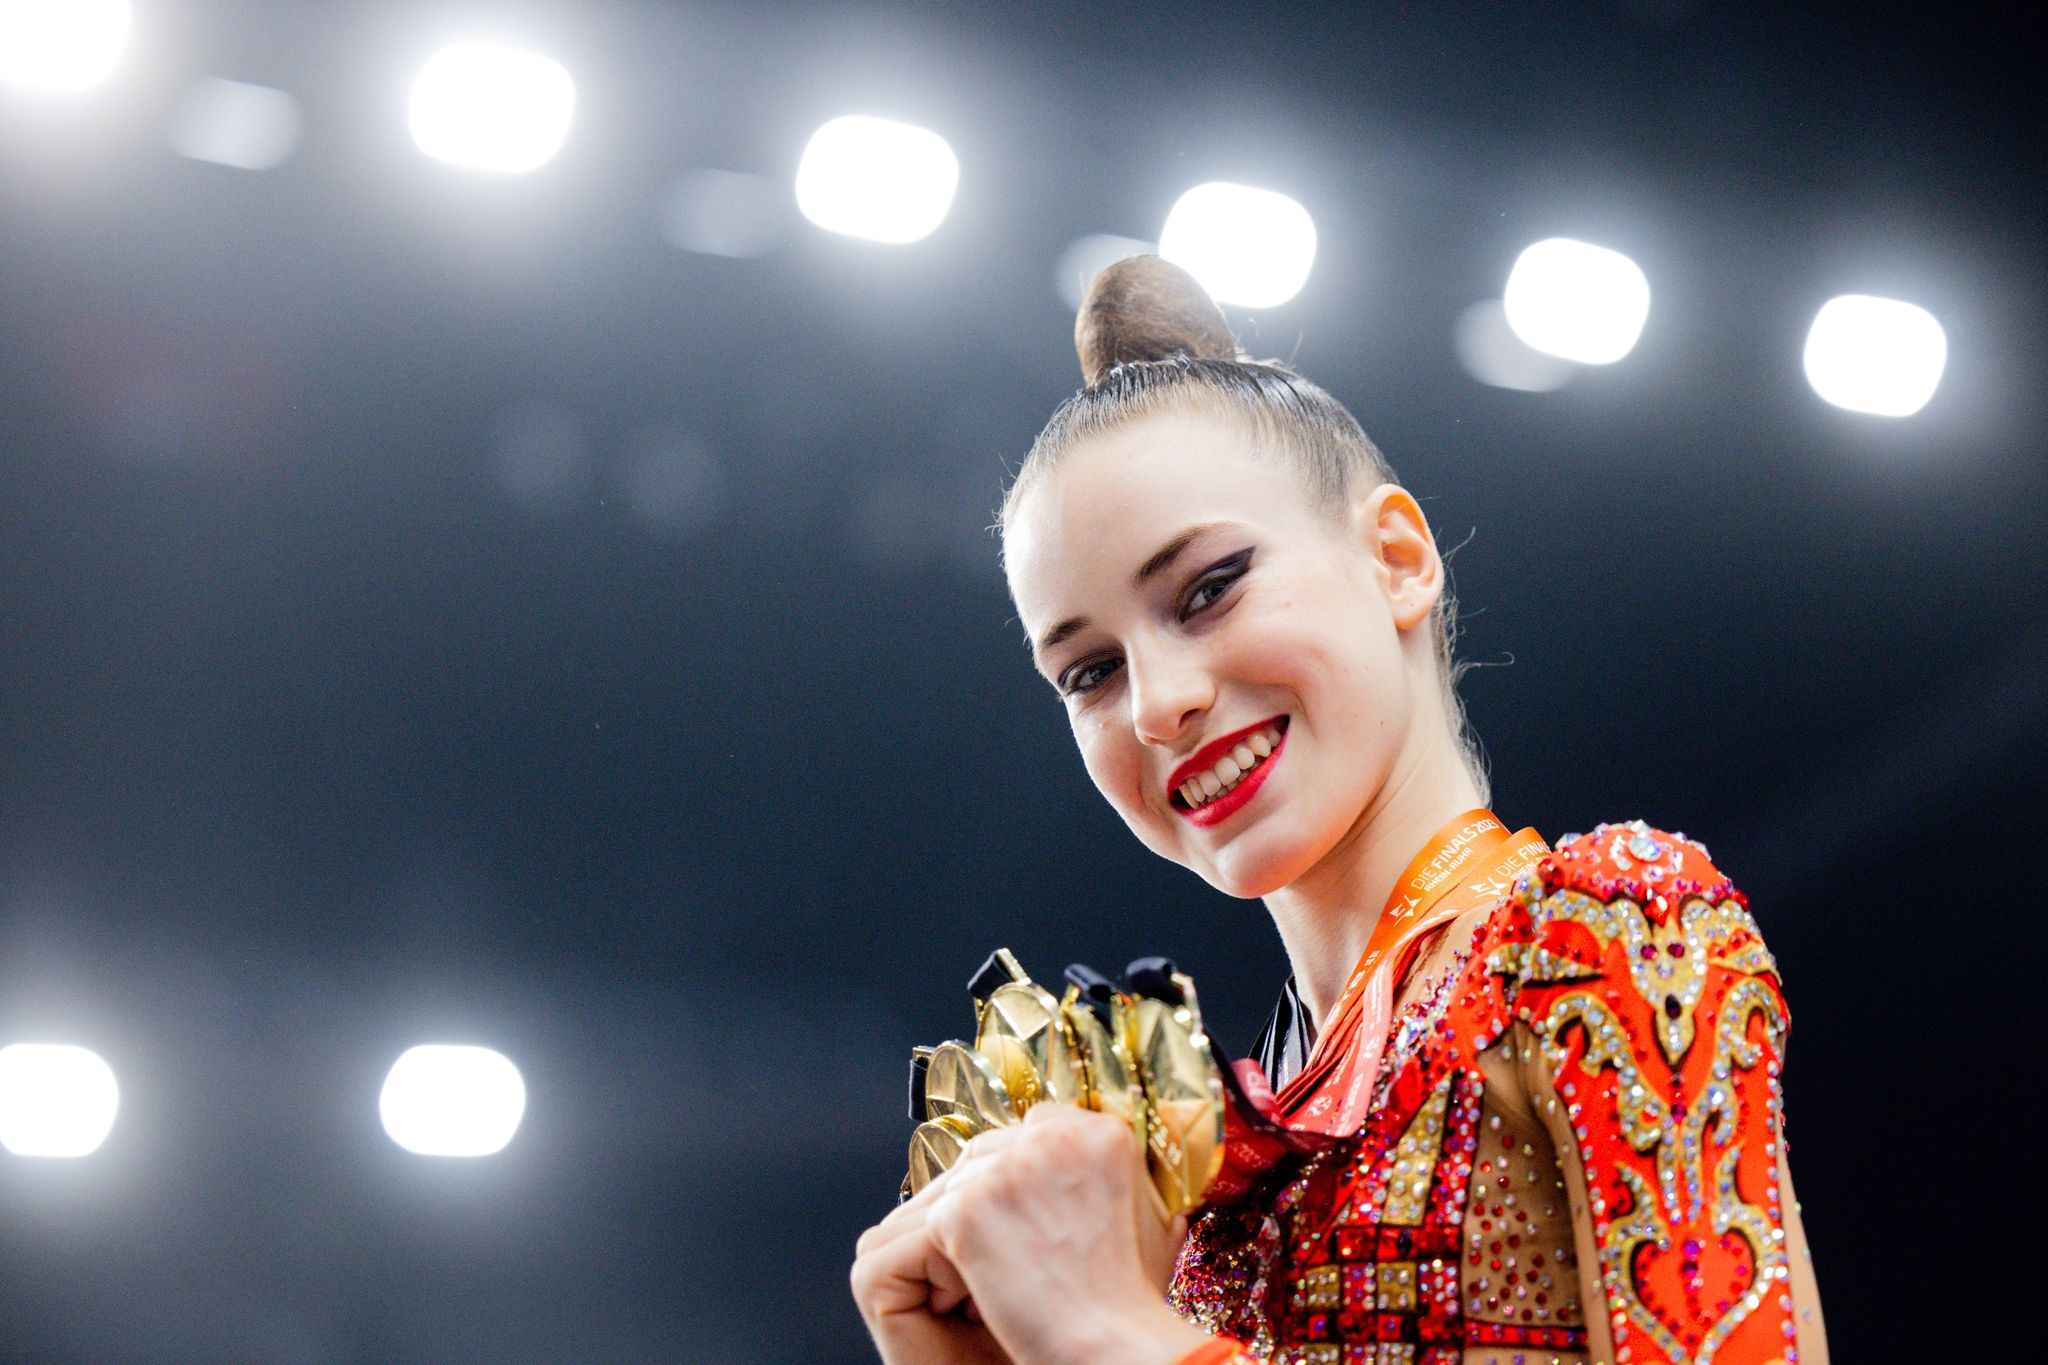 Die 16-jährige Darja Varfolomeev präsentiert ihre fünf Goldmedaillen.